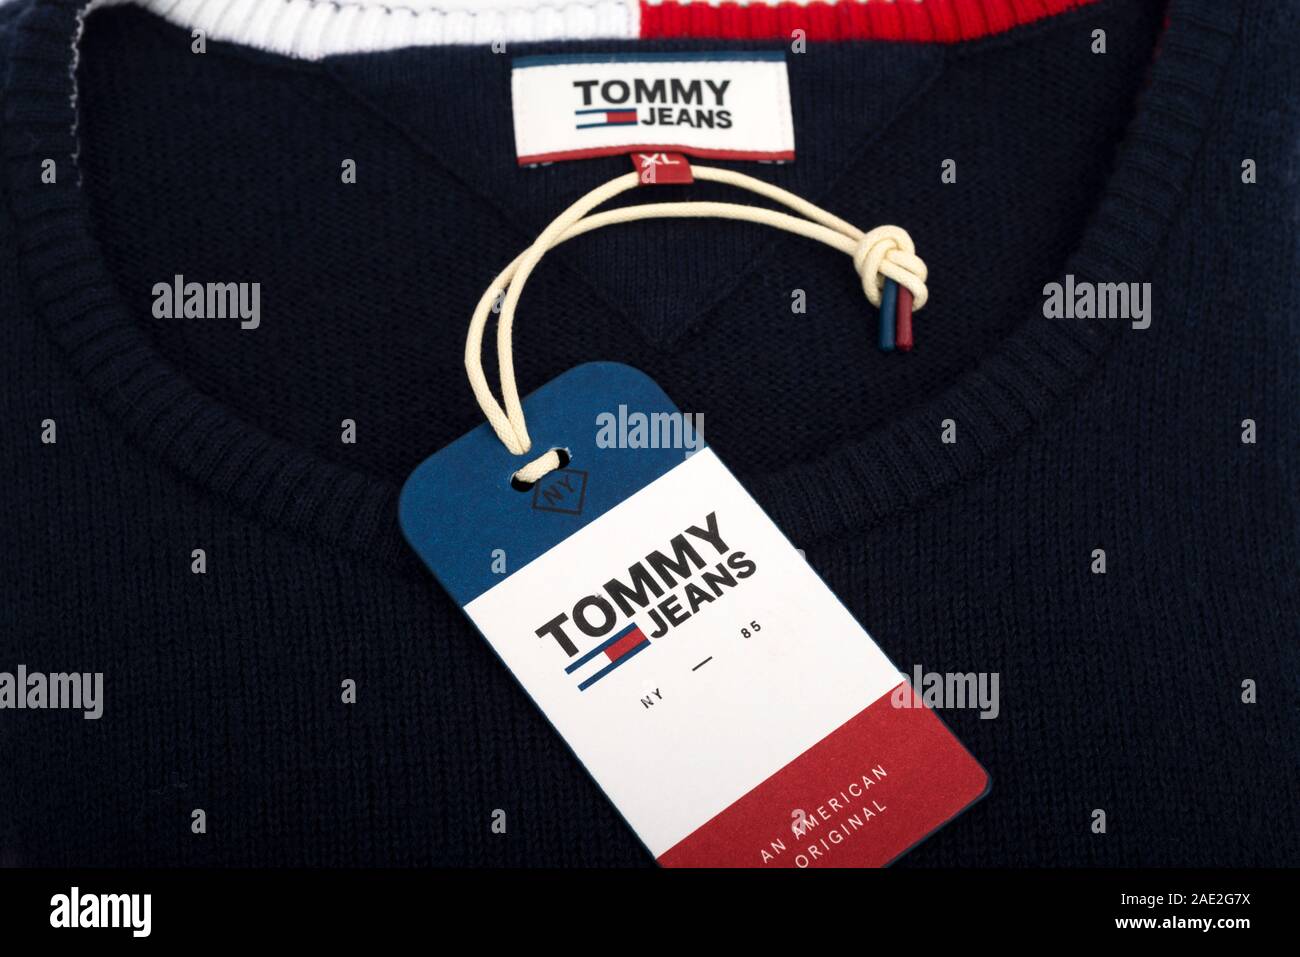 Tommy Jeans sweater Stock Photo - Alamy